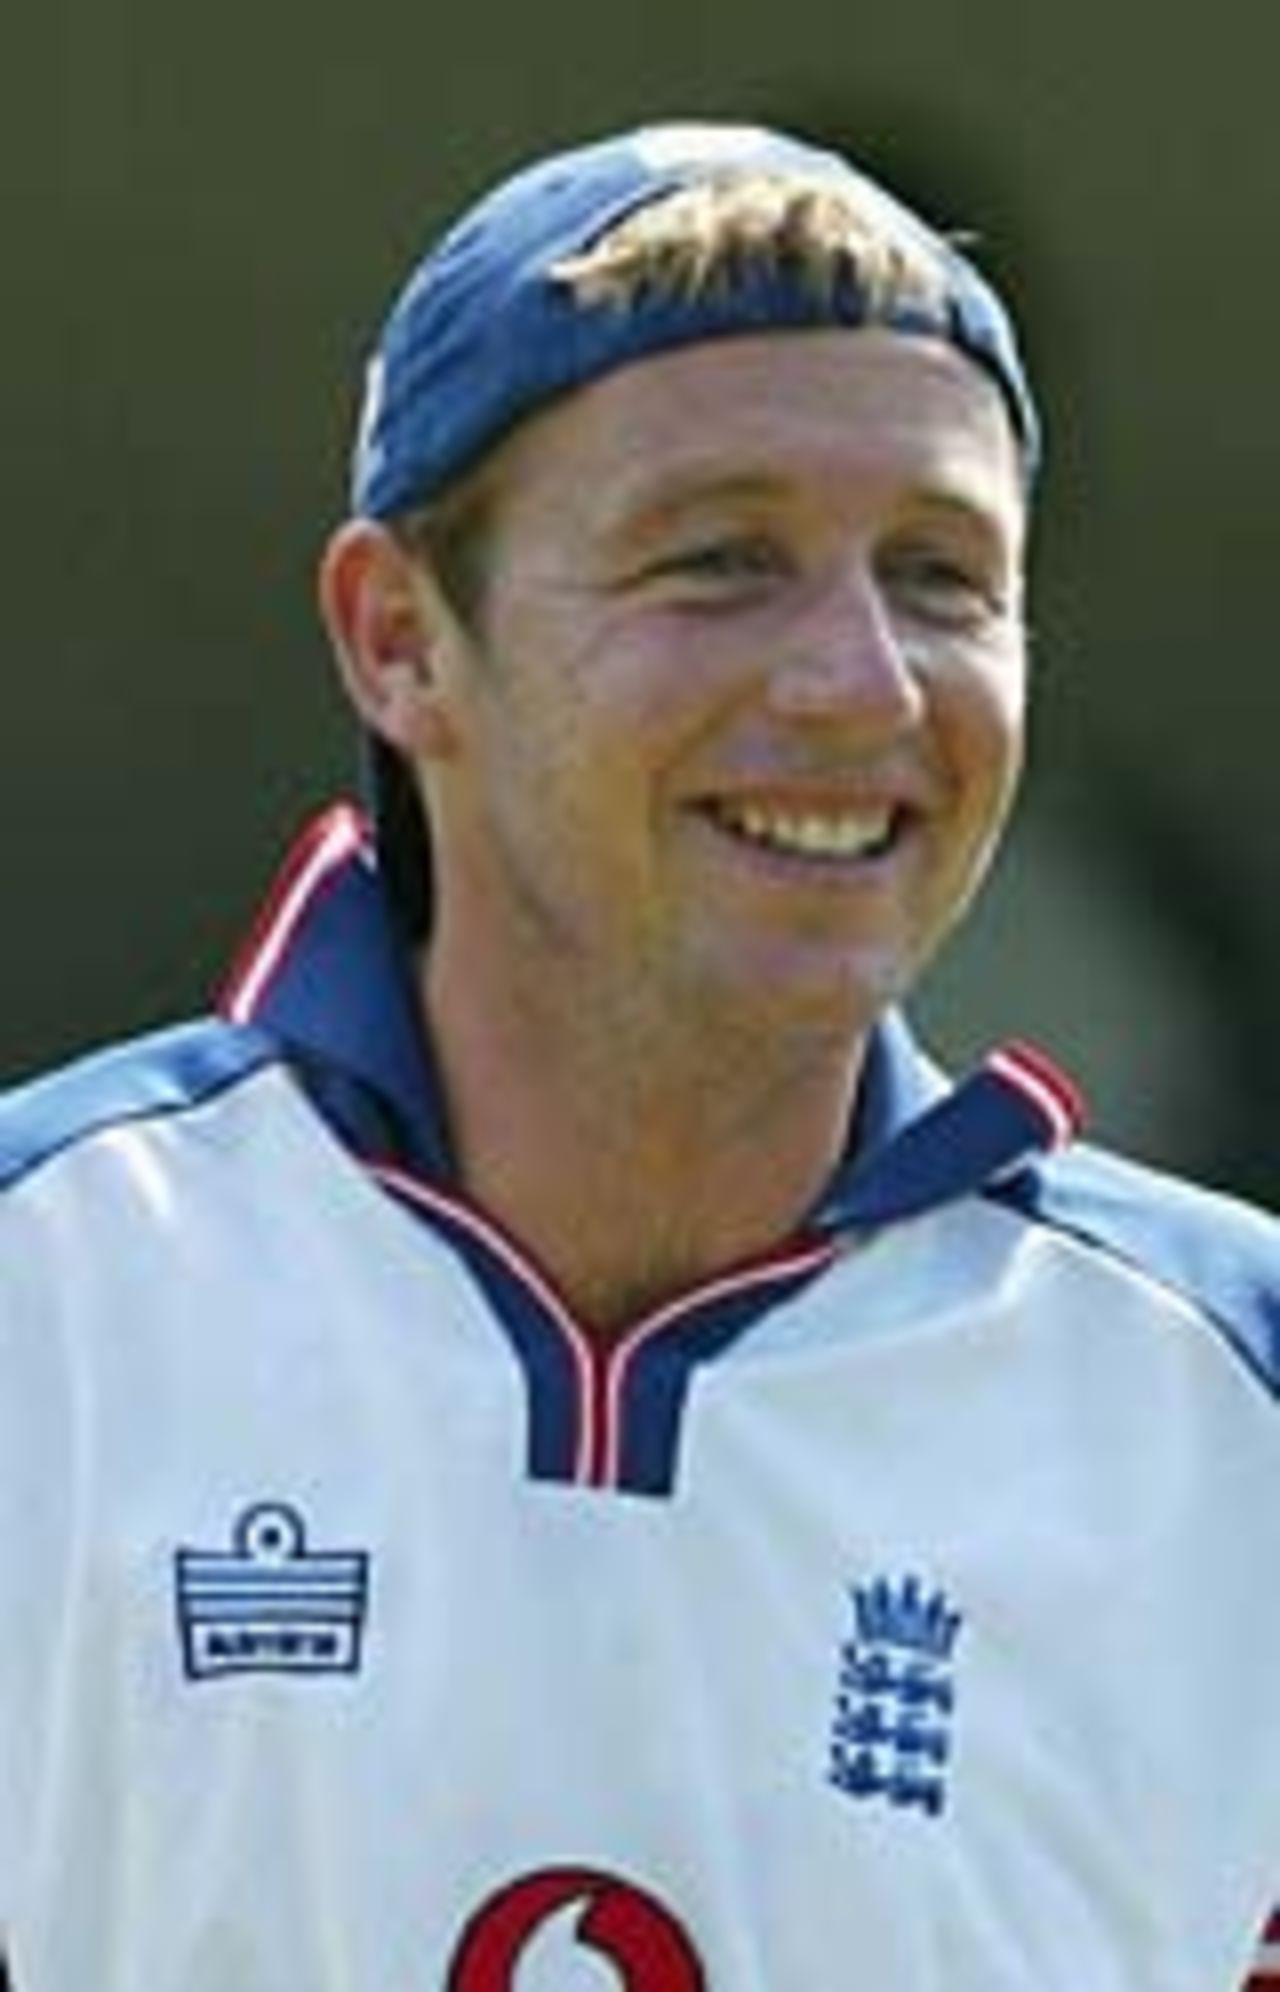 Robert Croft during England's tour of Sri Lanka, December 2003